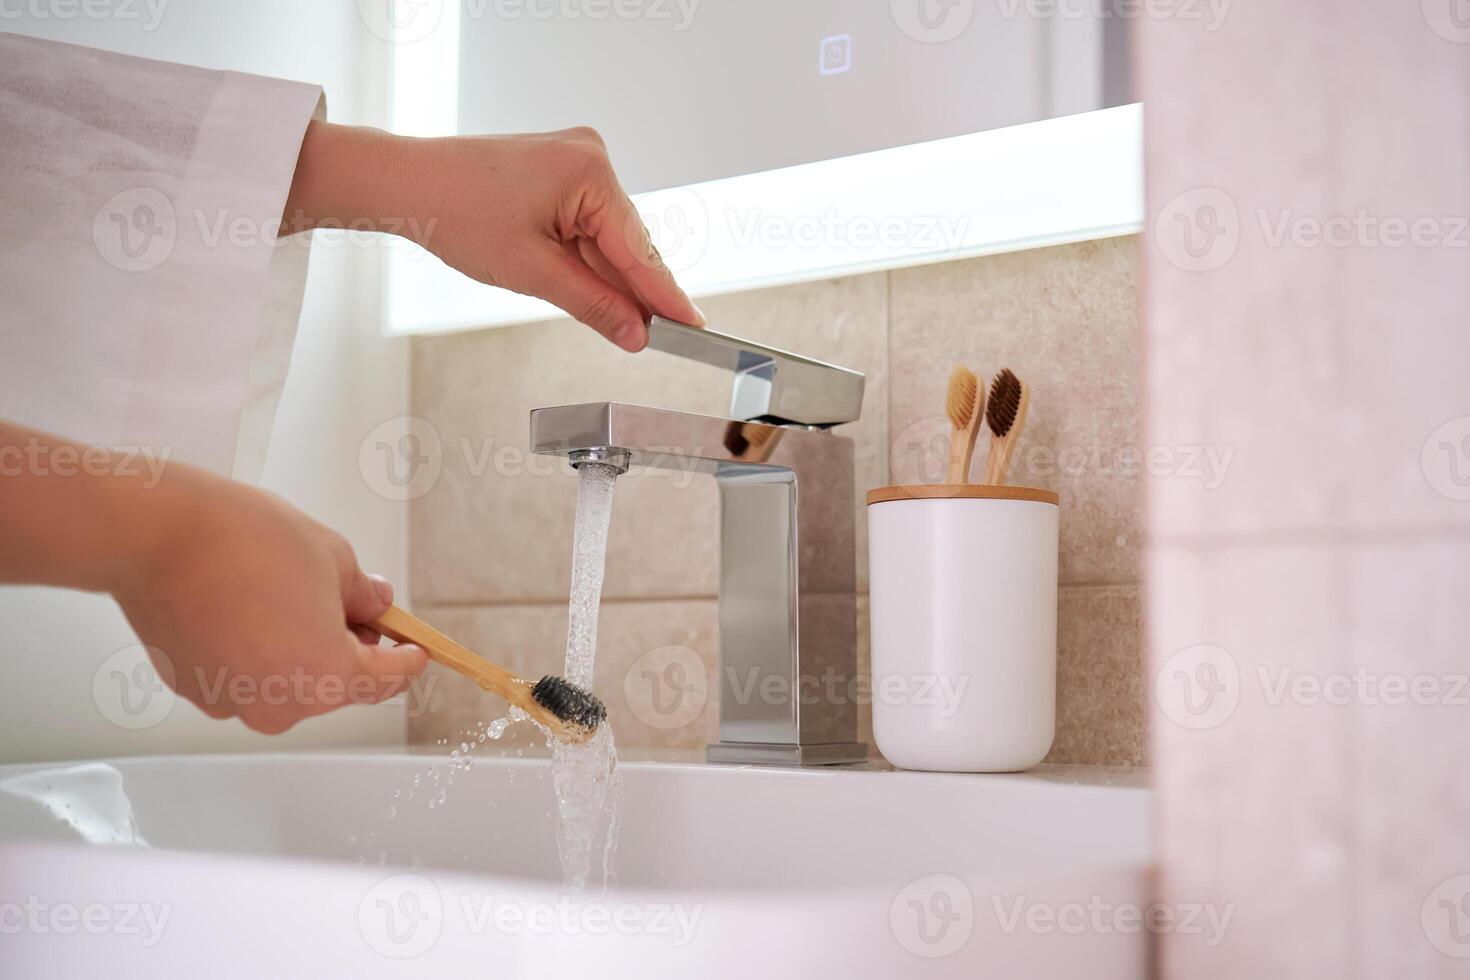 vrouwen handen onder rennen water in de badkamer. ochtend- routine. foto